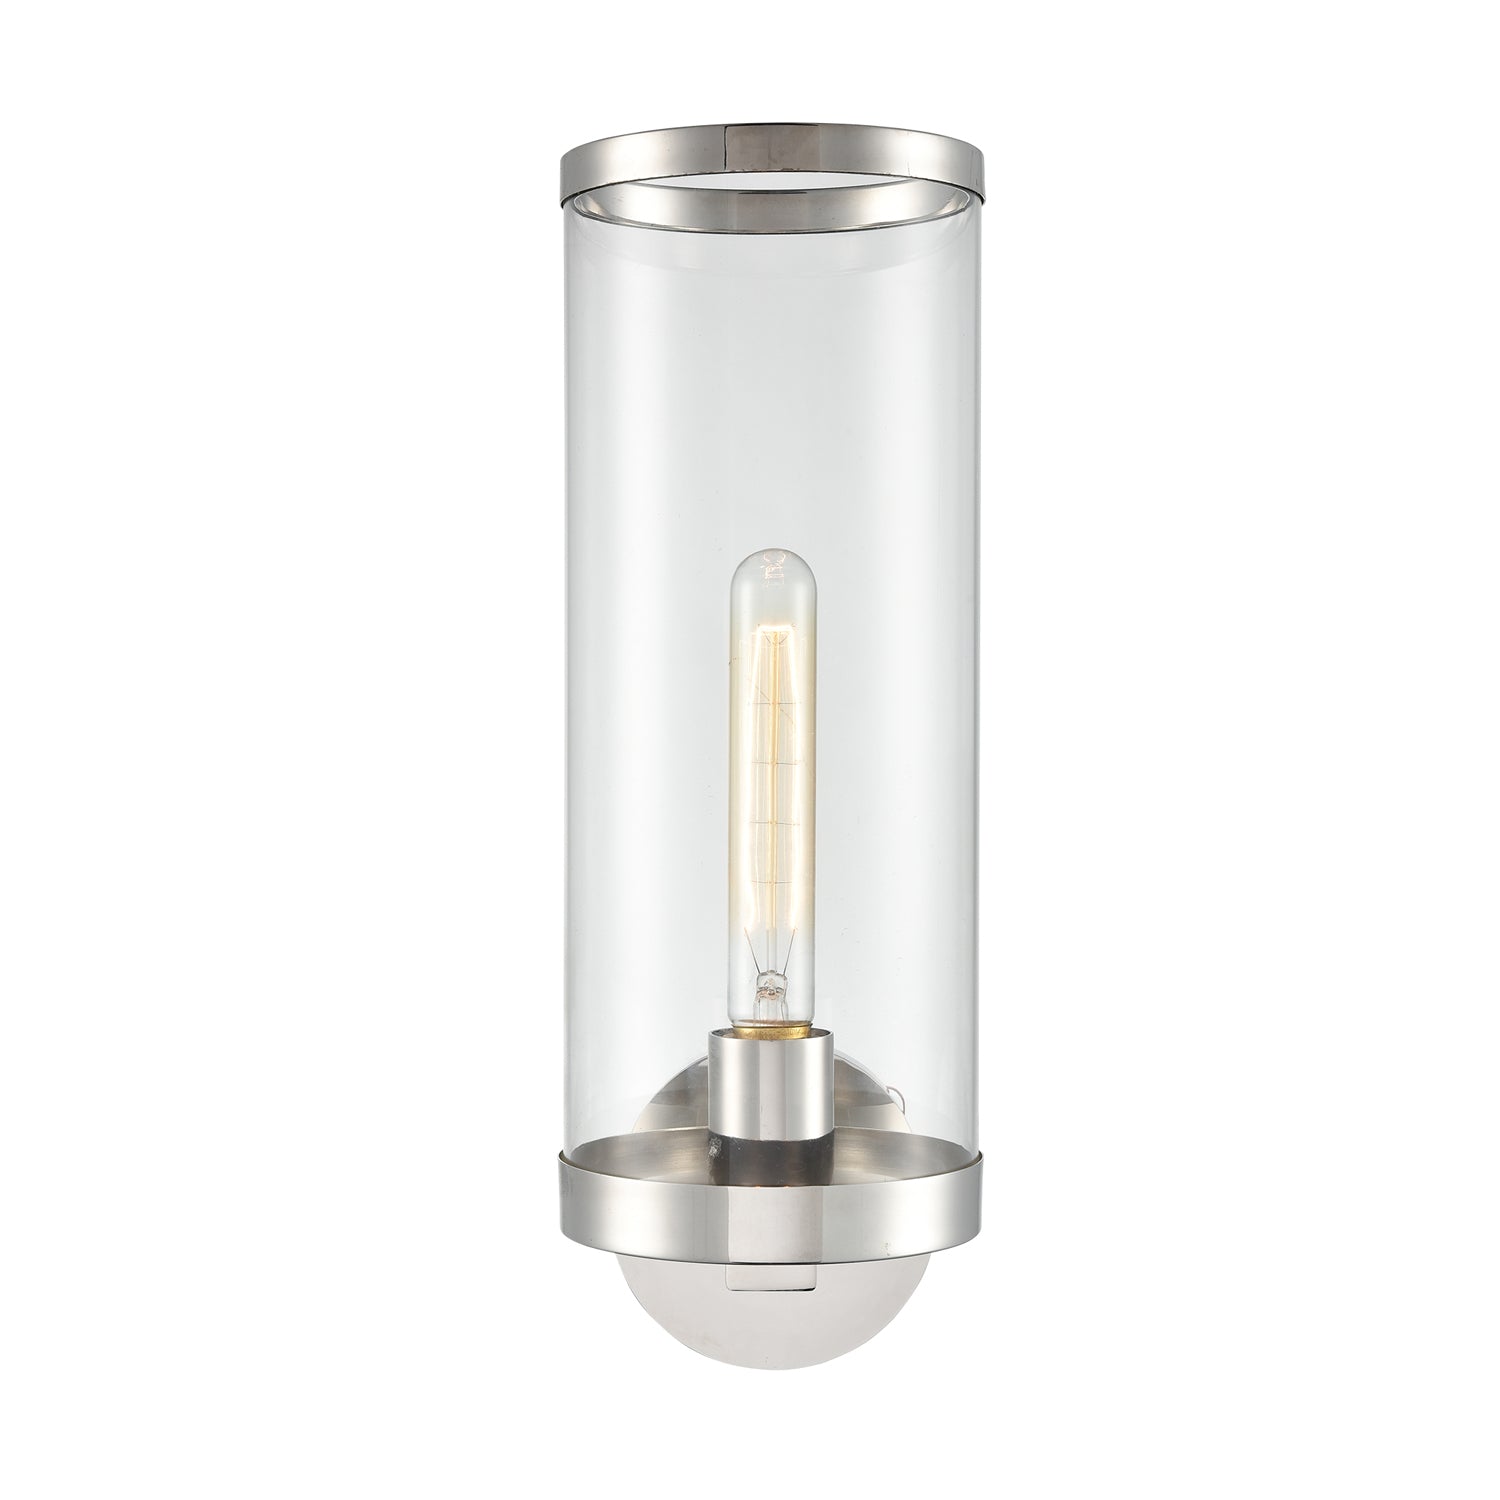 Alora Canada - One Light Bathroom Fixture - Revolve Ii - Clear Glass/Polished Nickel- Union Lighting Luminaires Decor